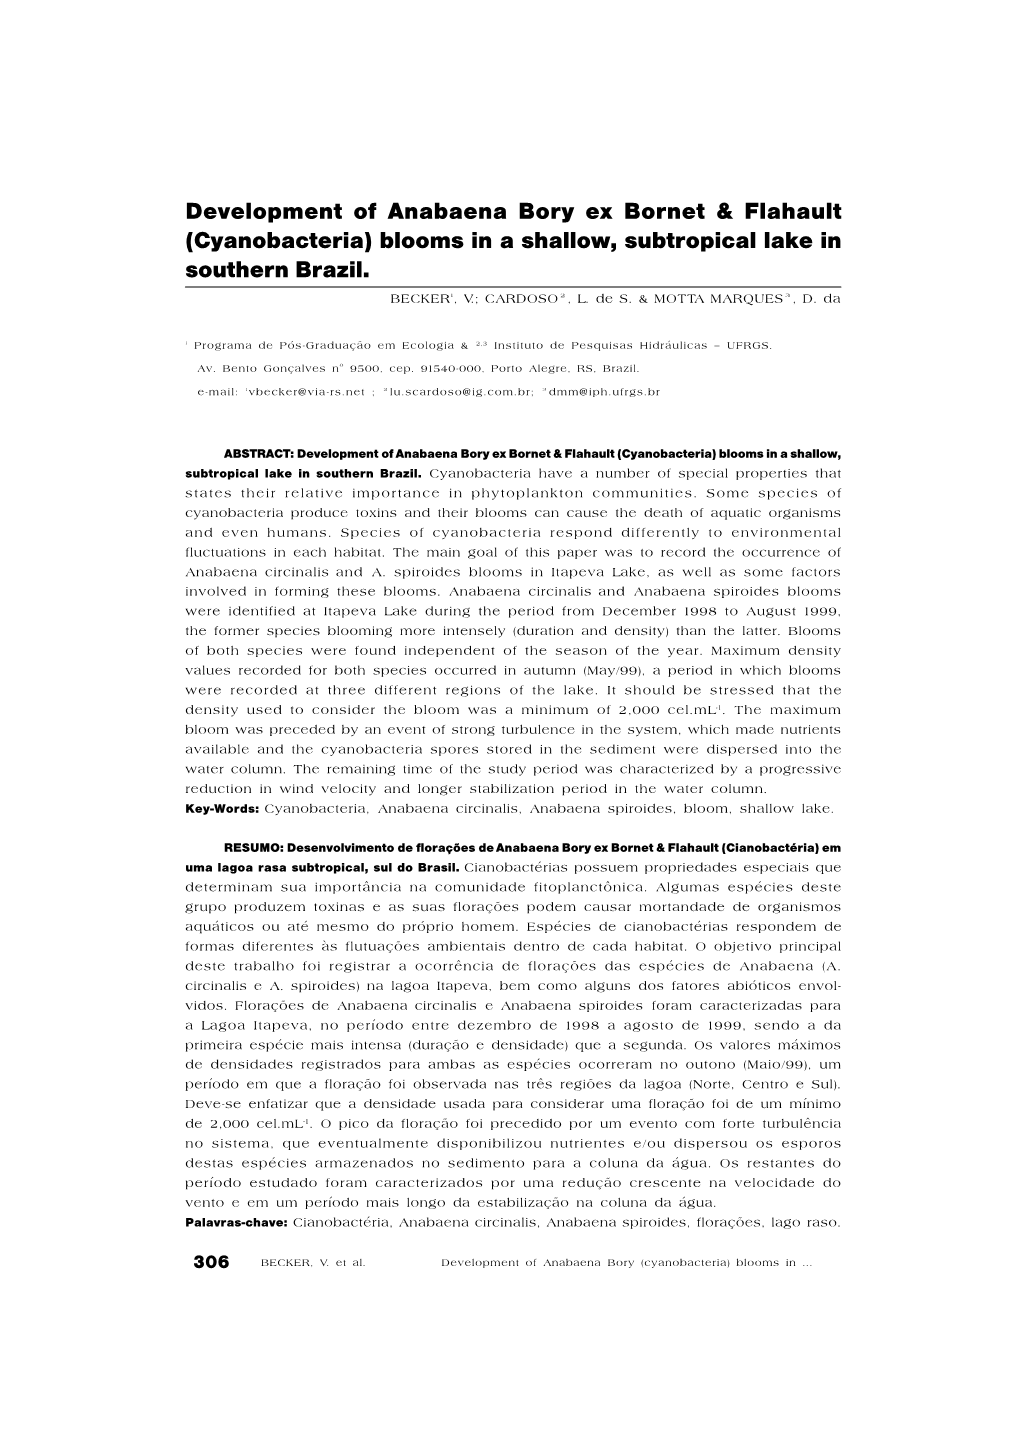 Development of Anabaena Bory Ex Bornet & Flahault (Cyanobacteria